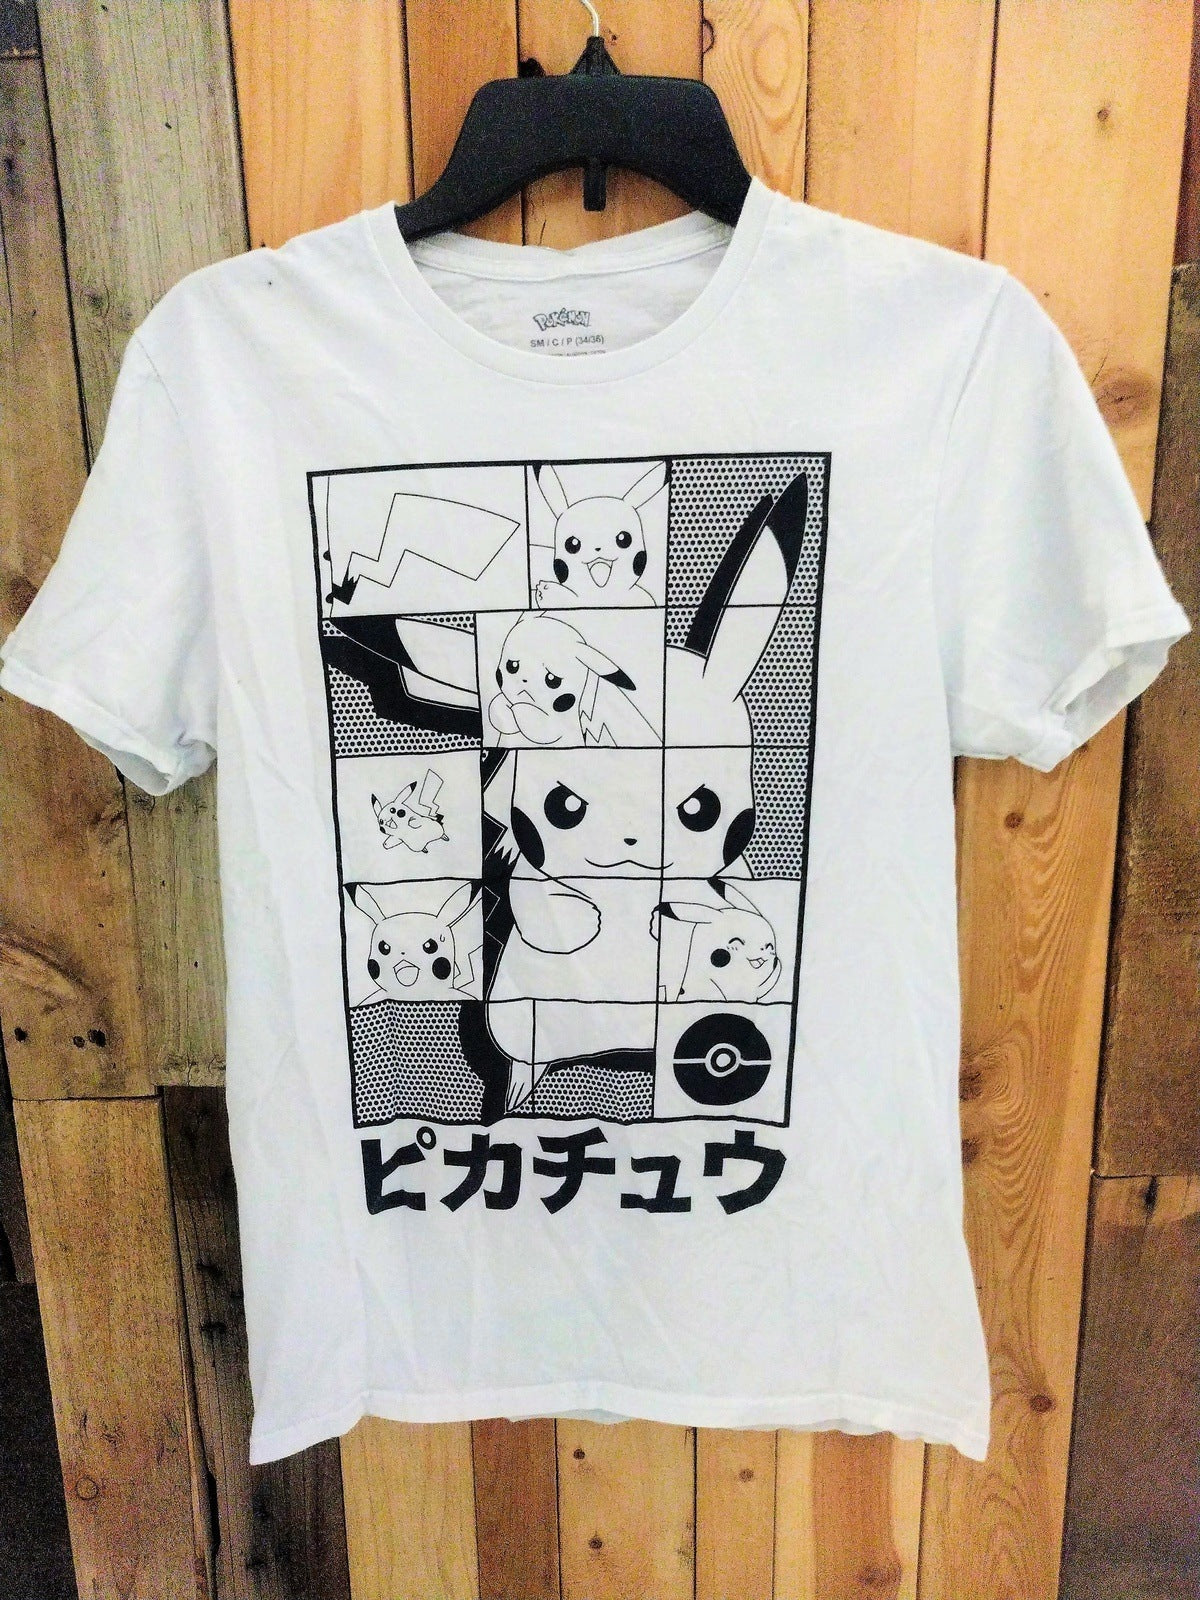 Pokemon Official Merchandise Women's T Shirt Size Small 141951WH